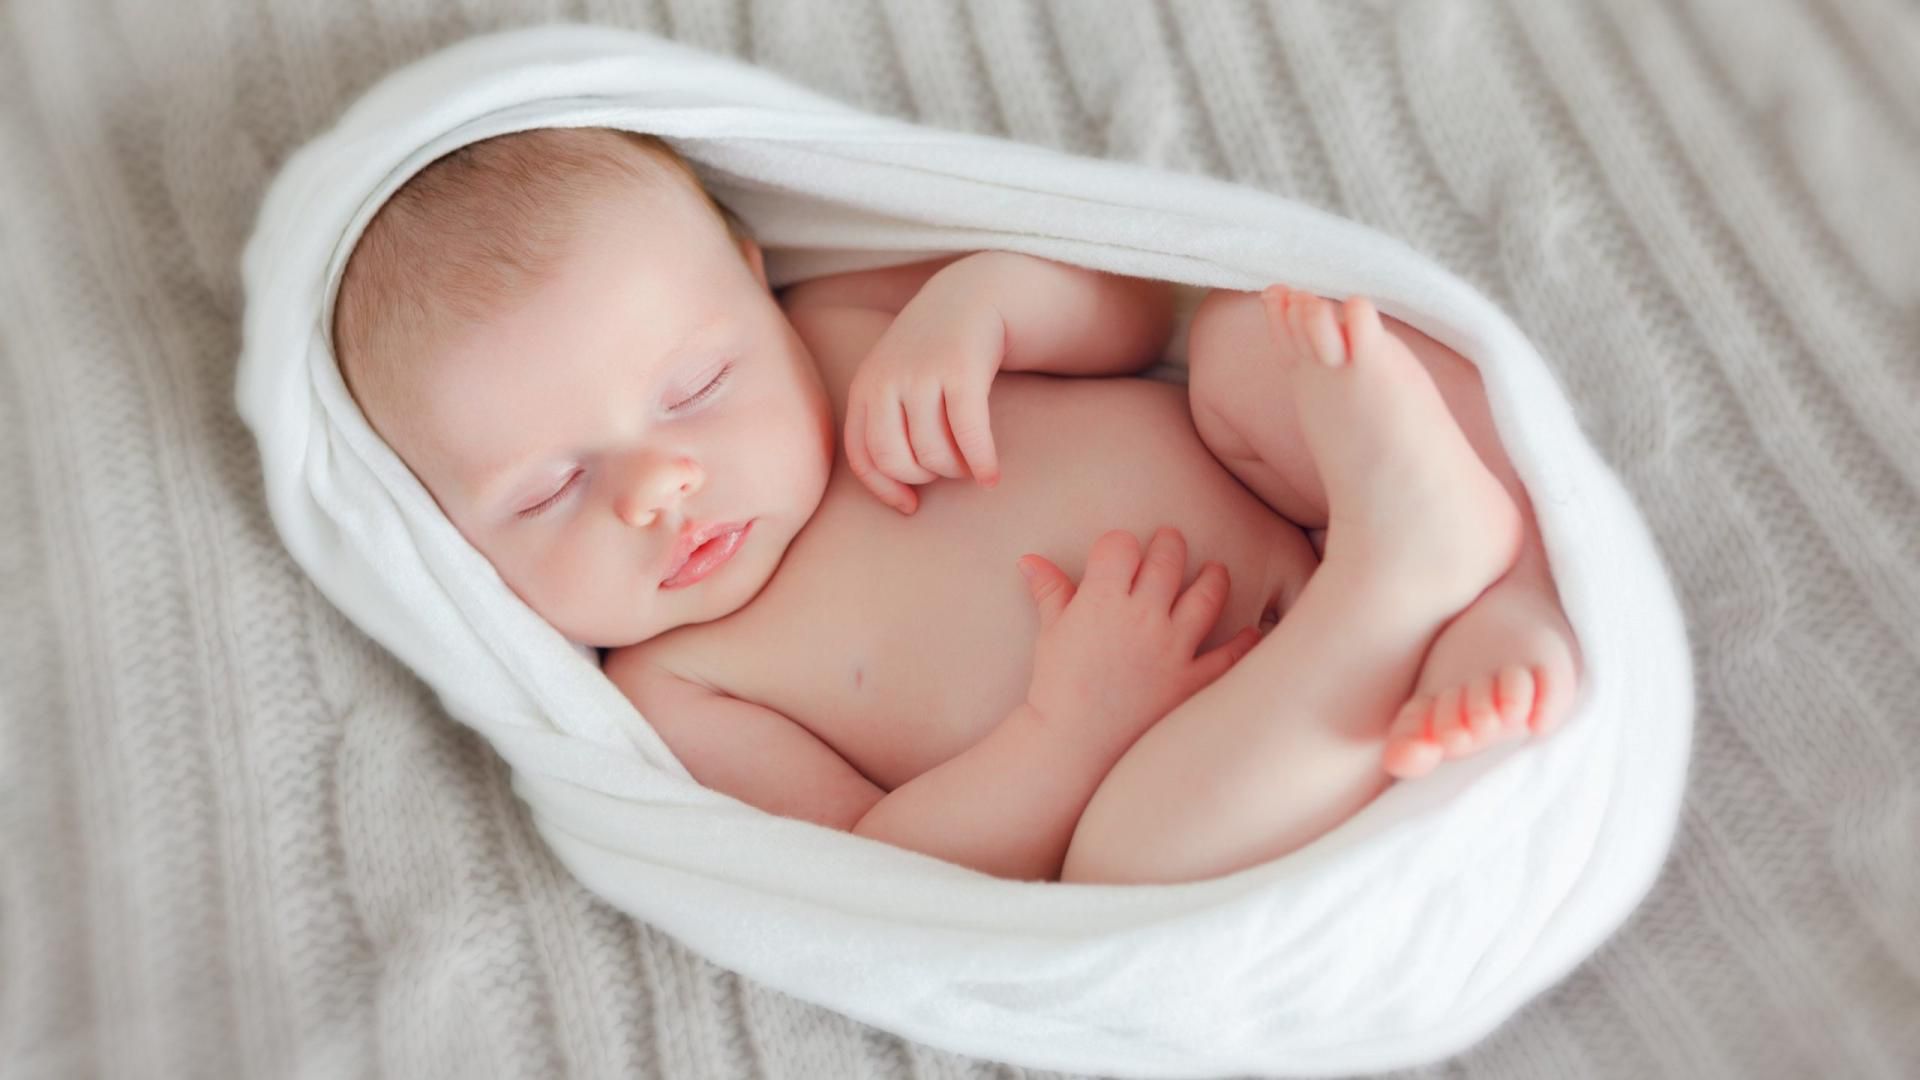 Sleeping Newborn Baby Boy Picture for Wallpaper Wallpaper. Wallpaper Download. High Resolution Wallpaper